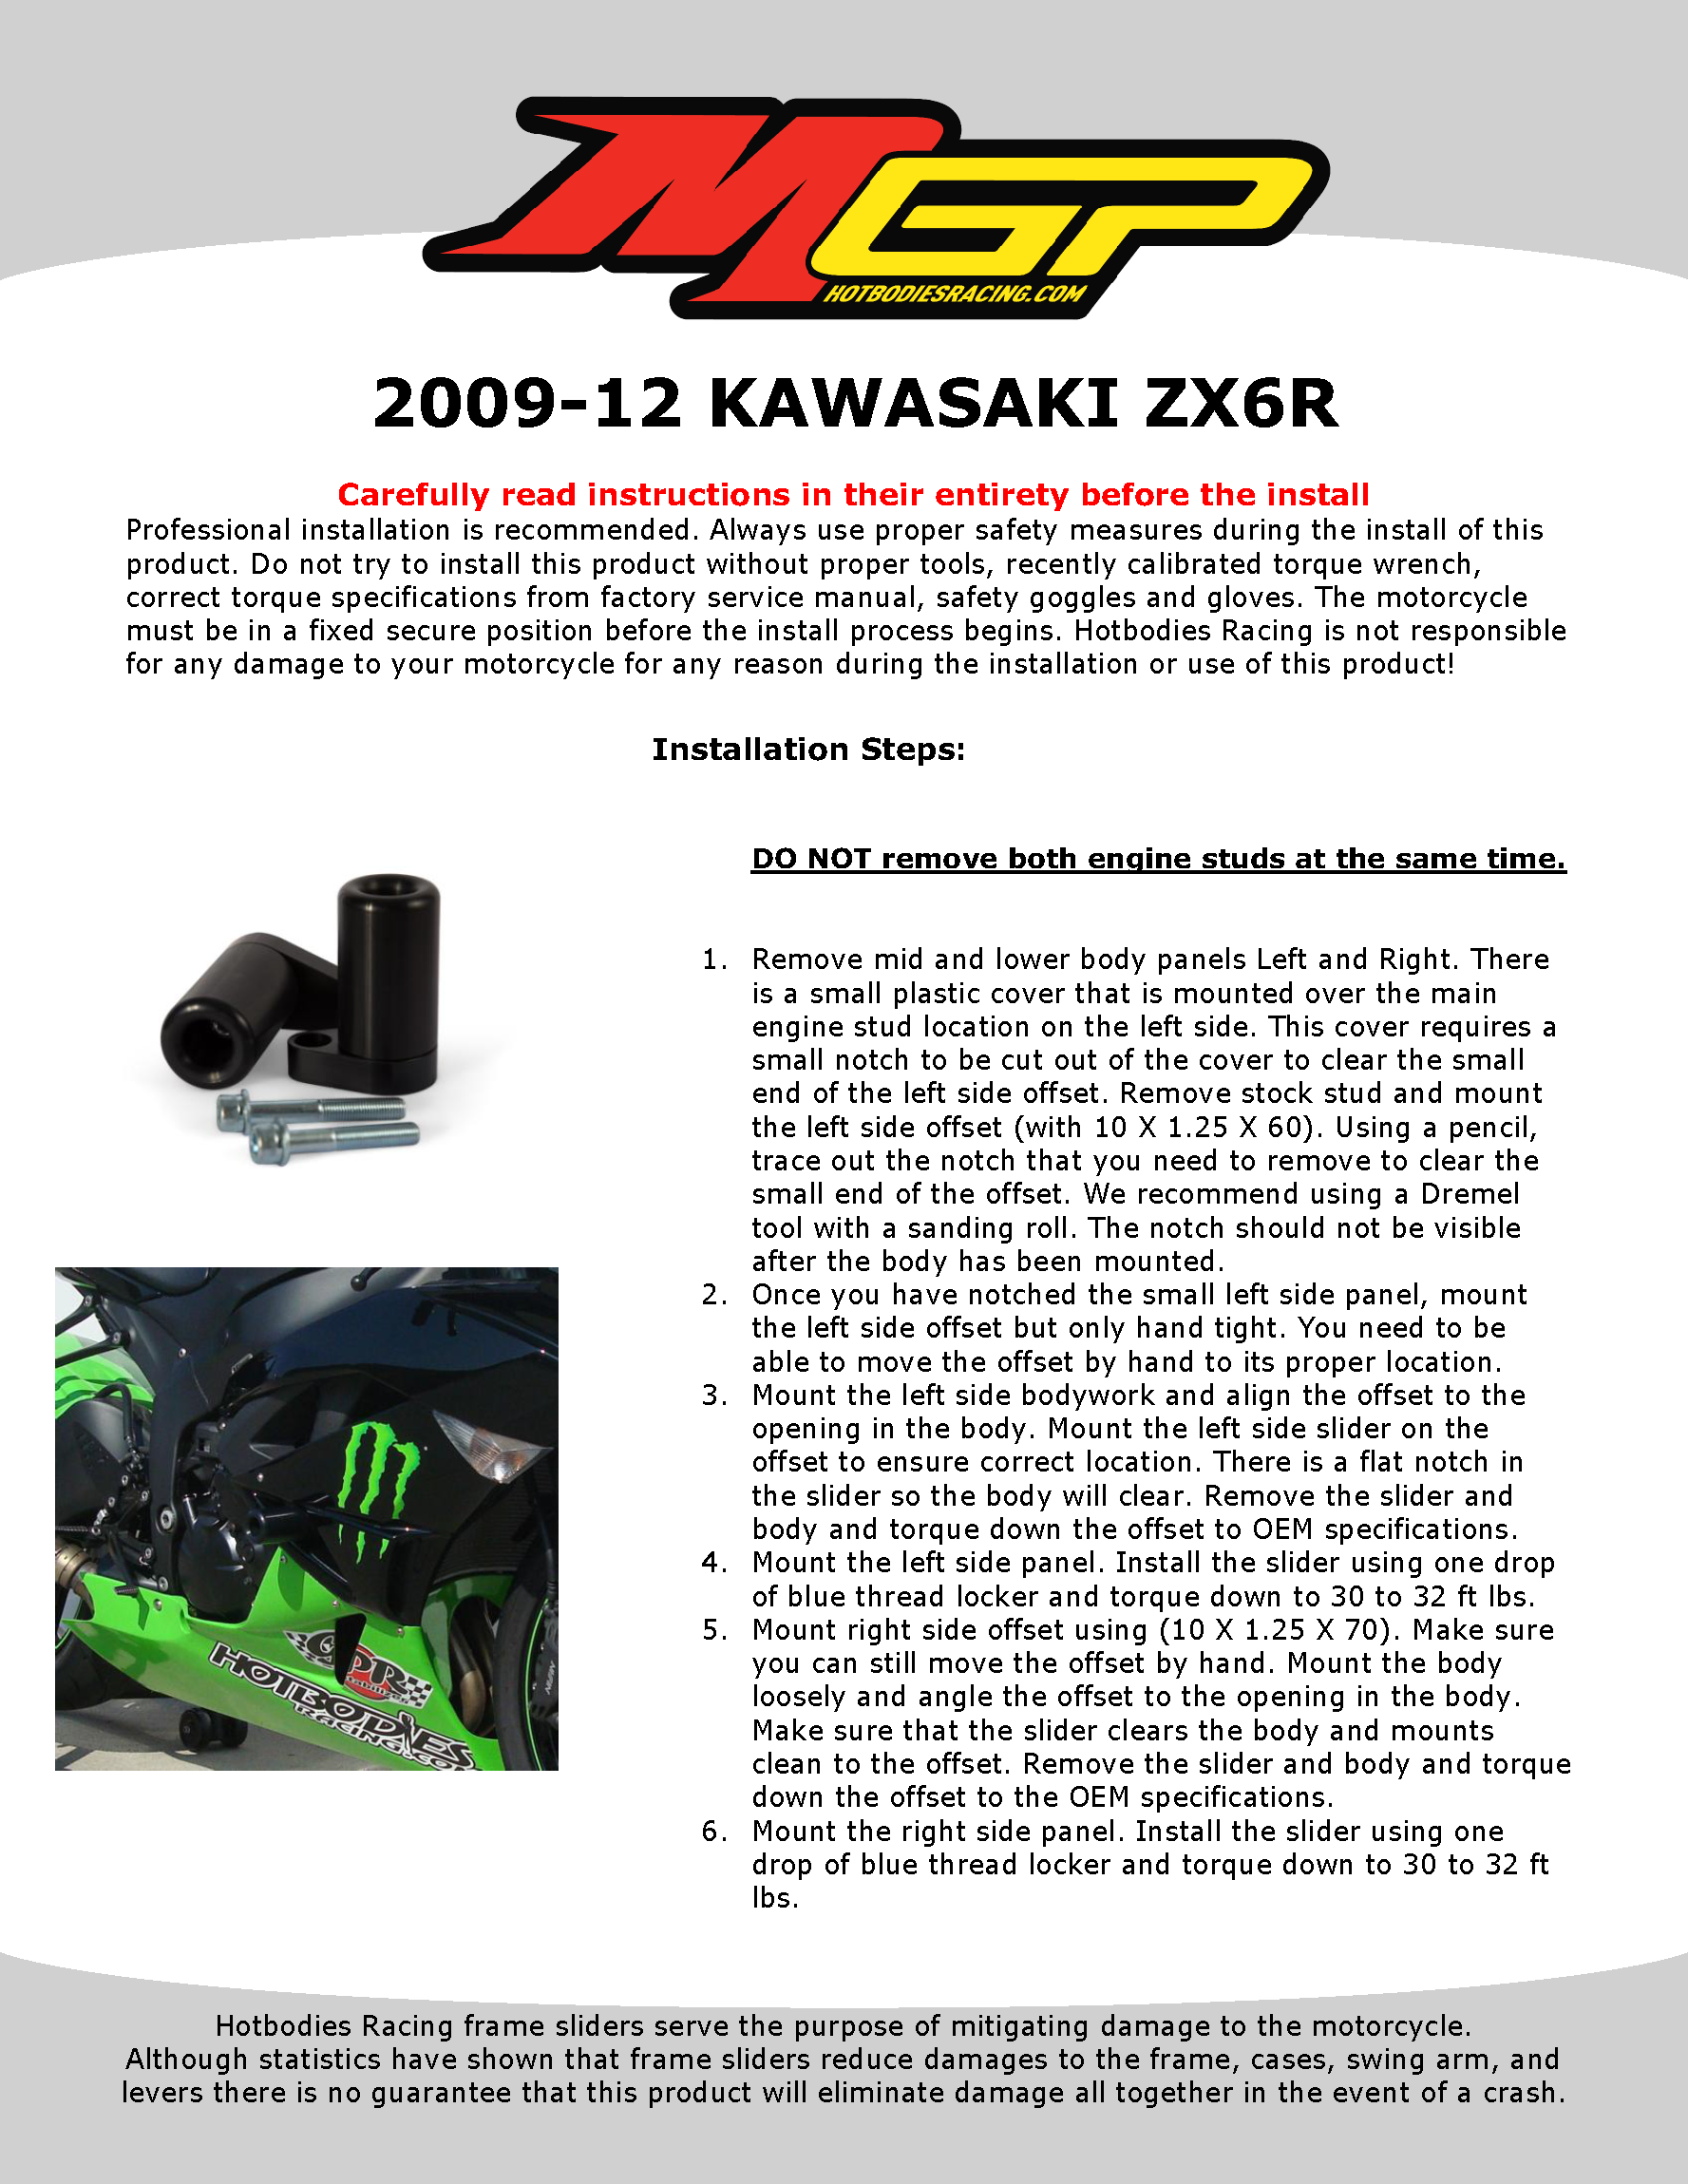 

2009-12 KAWASAKI ZX6R Frame Sliders Installation

